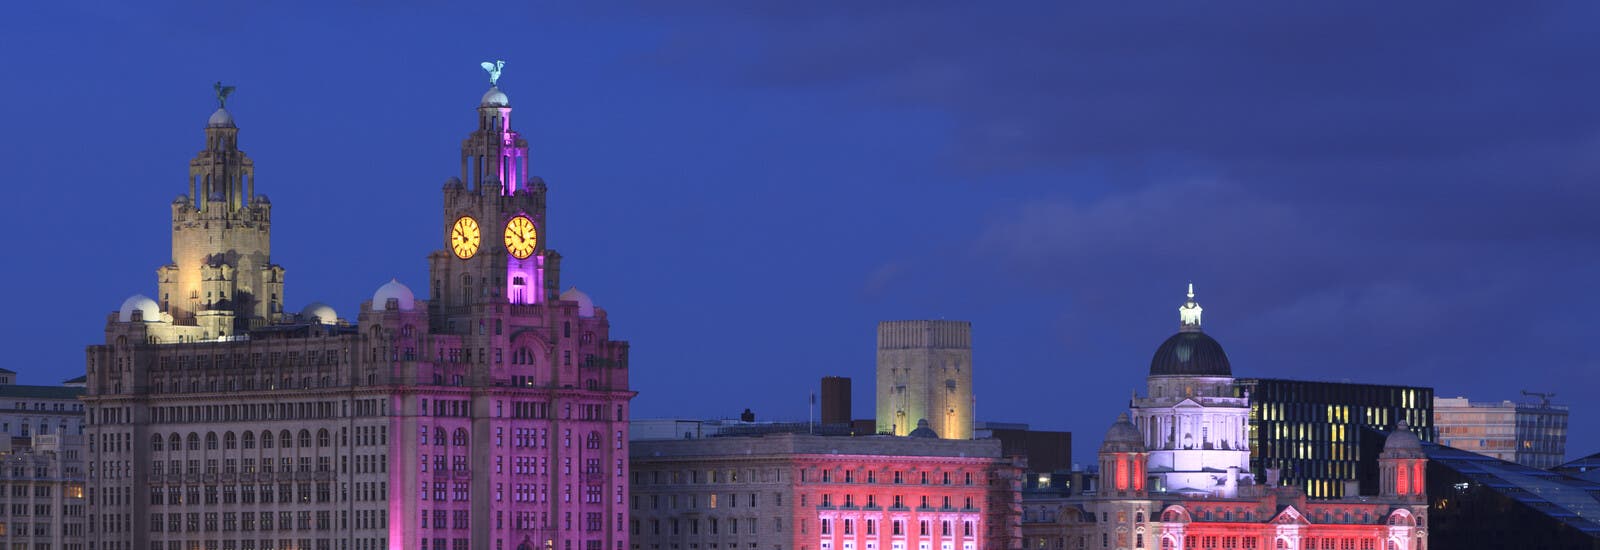 Liverpool's skyline at night.